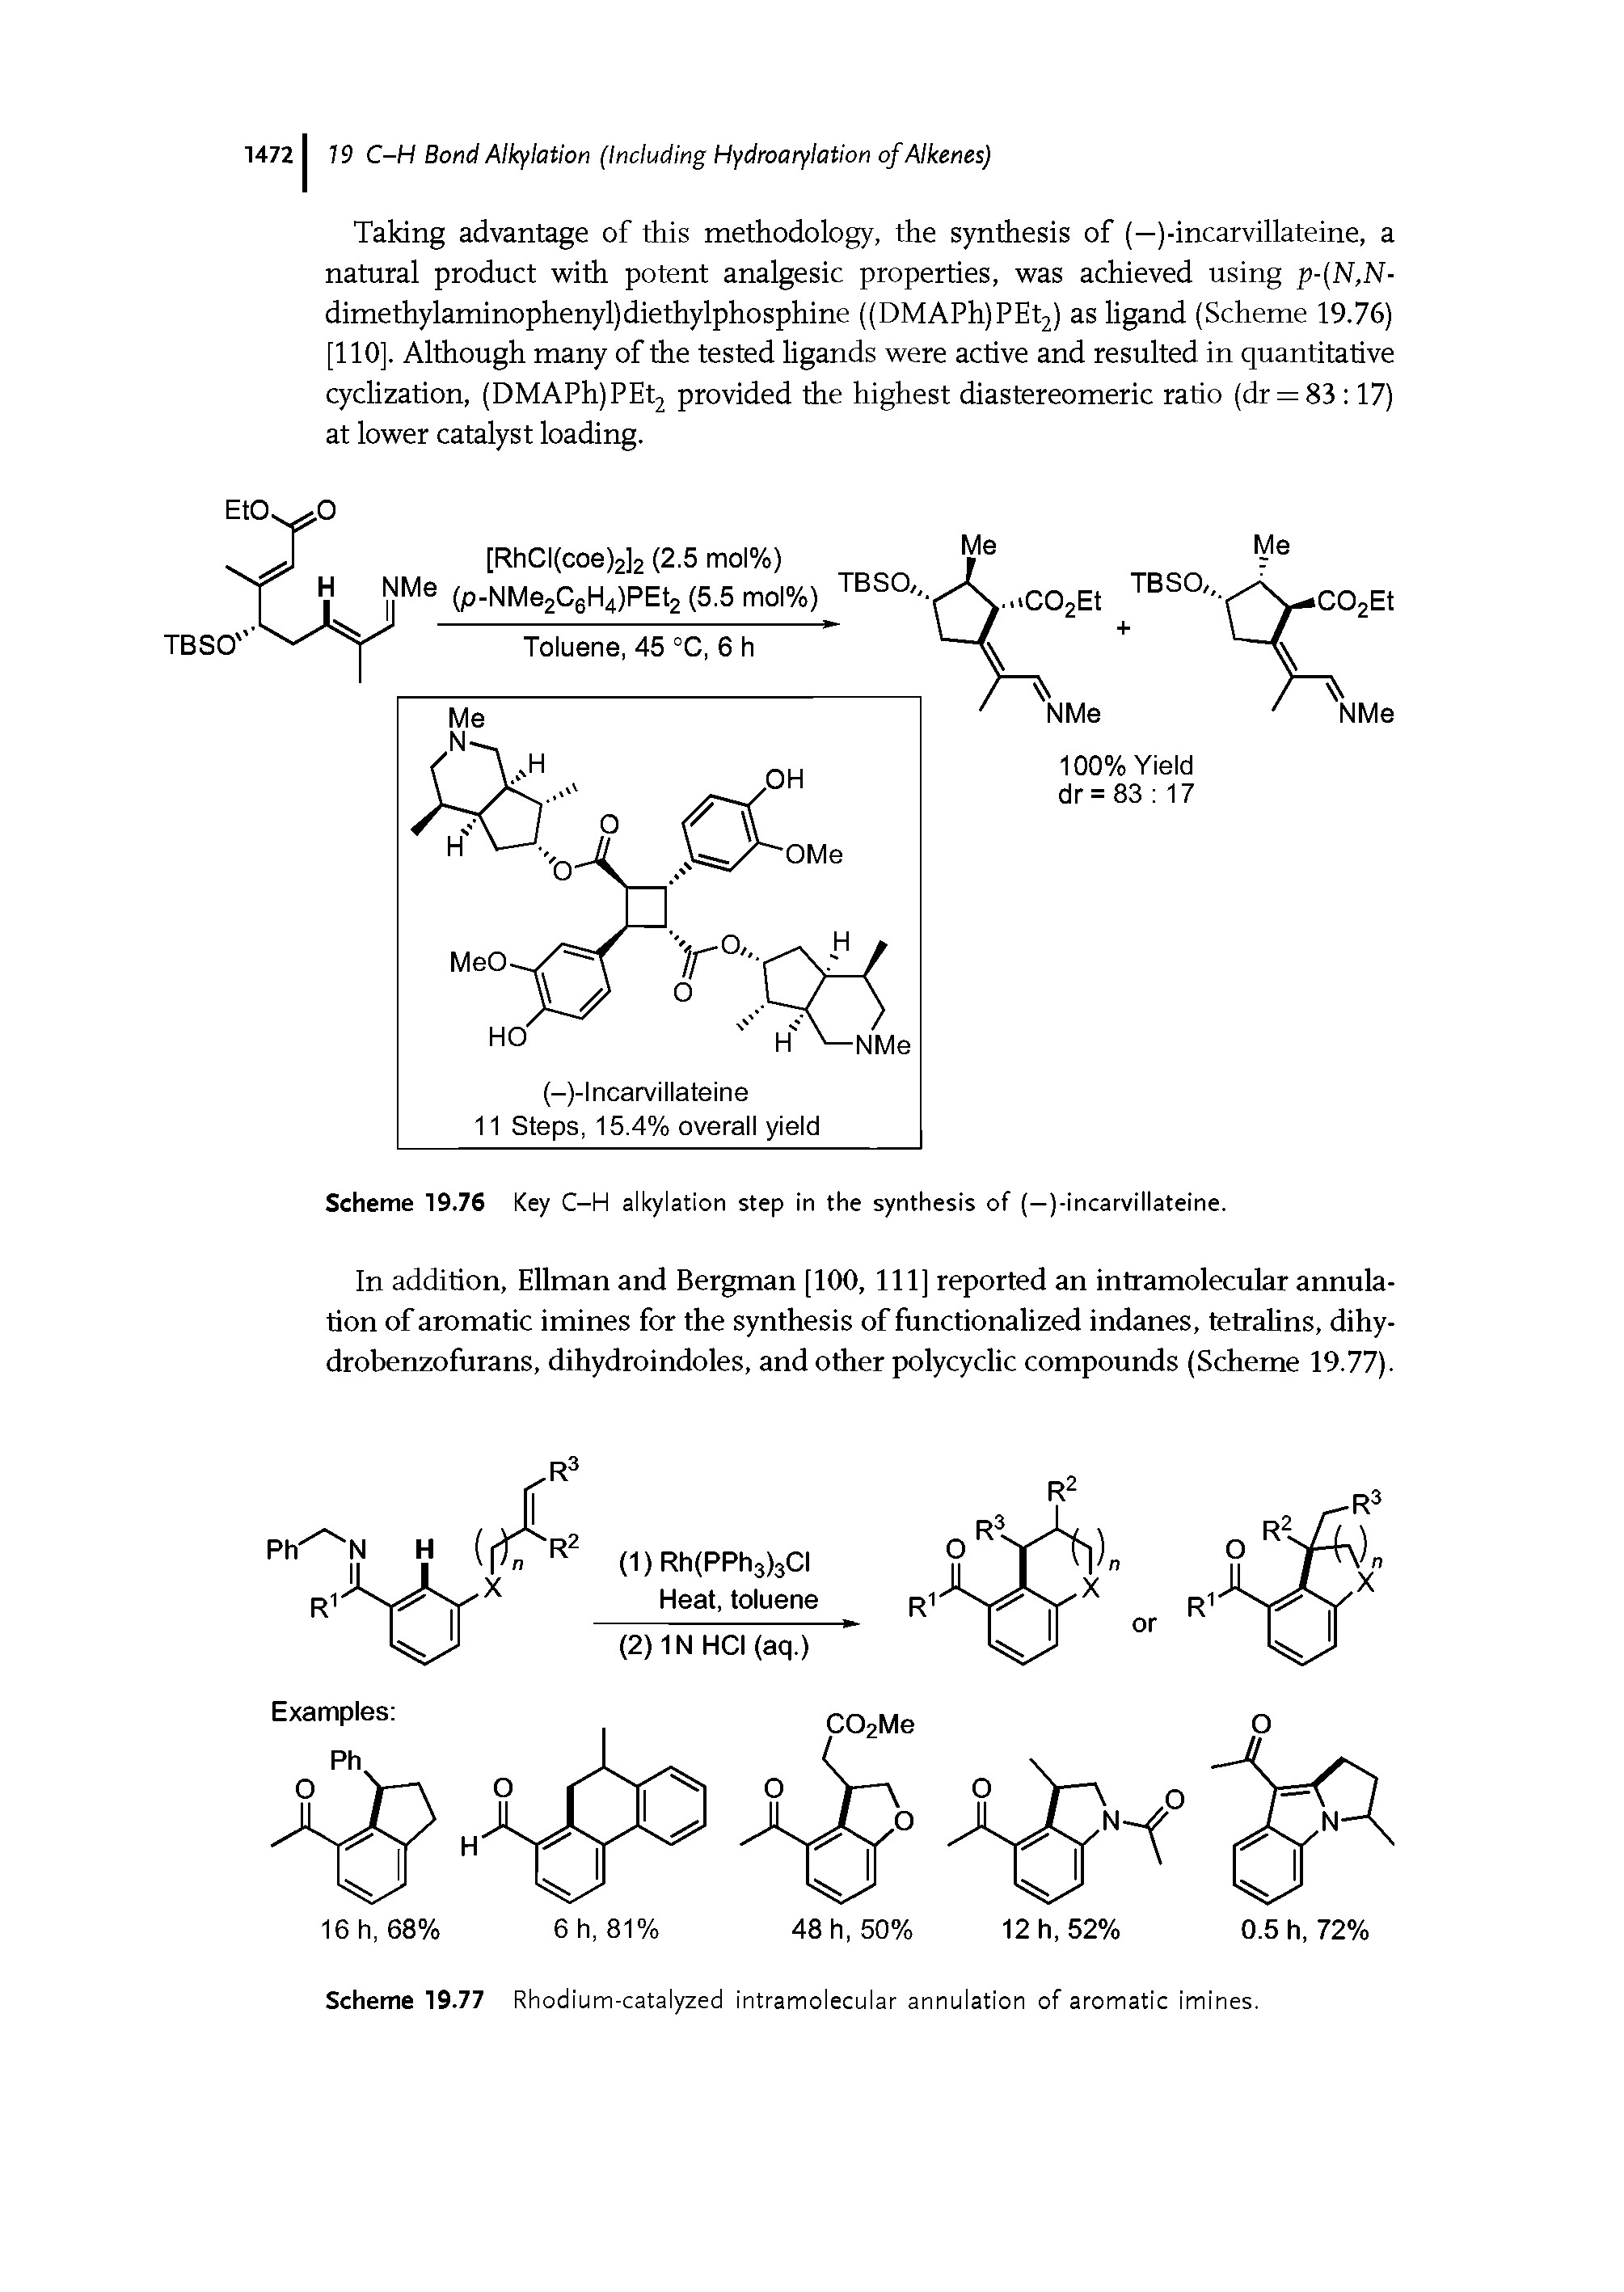 Scheme 19.77 Rhodium-catalyzed intramolecular annulation of aromatic imines.